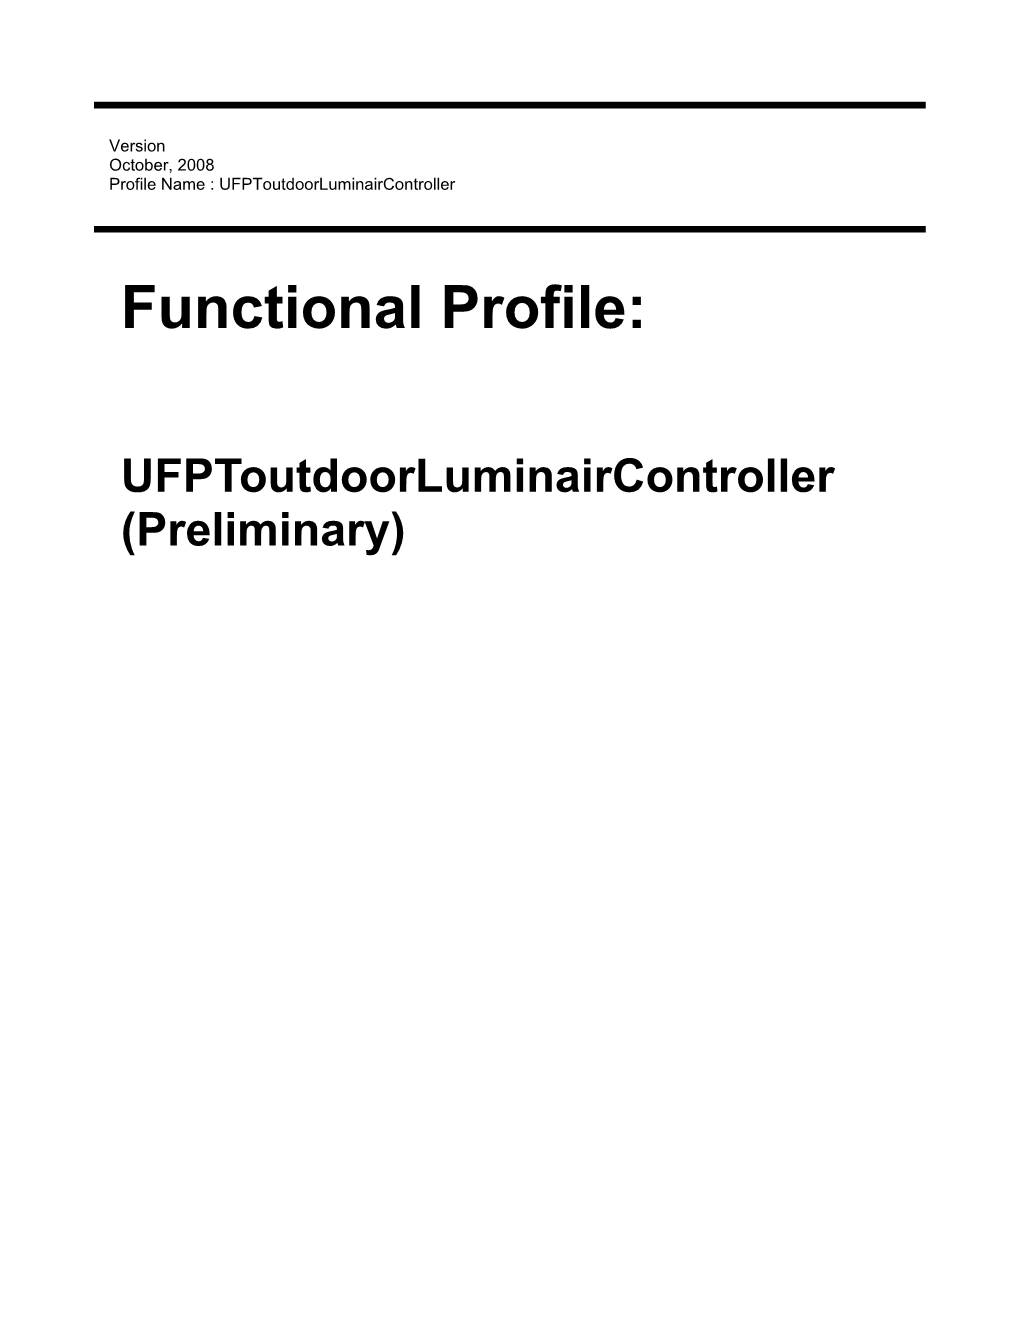 Functional Profile